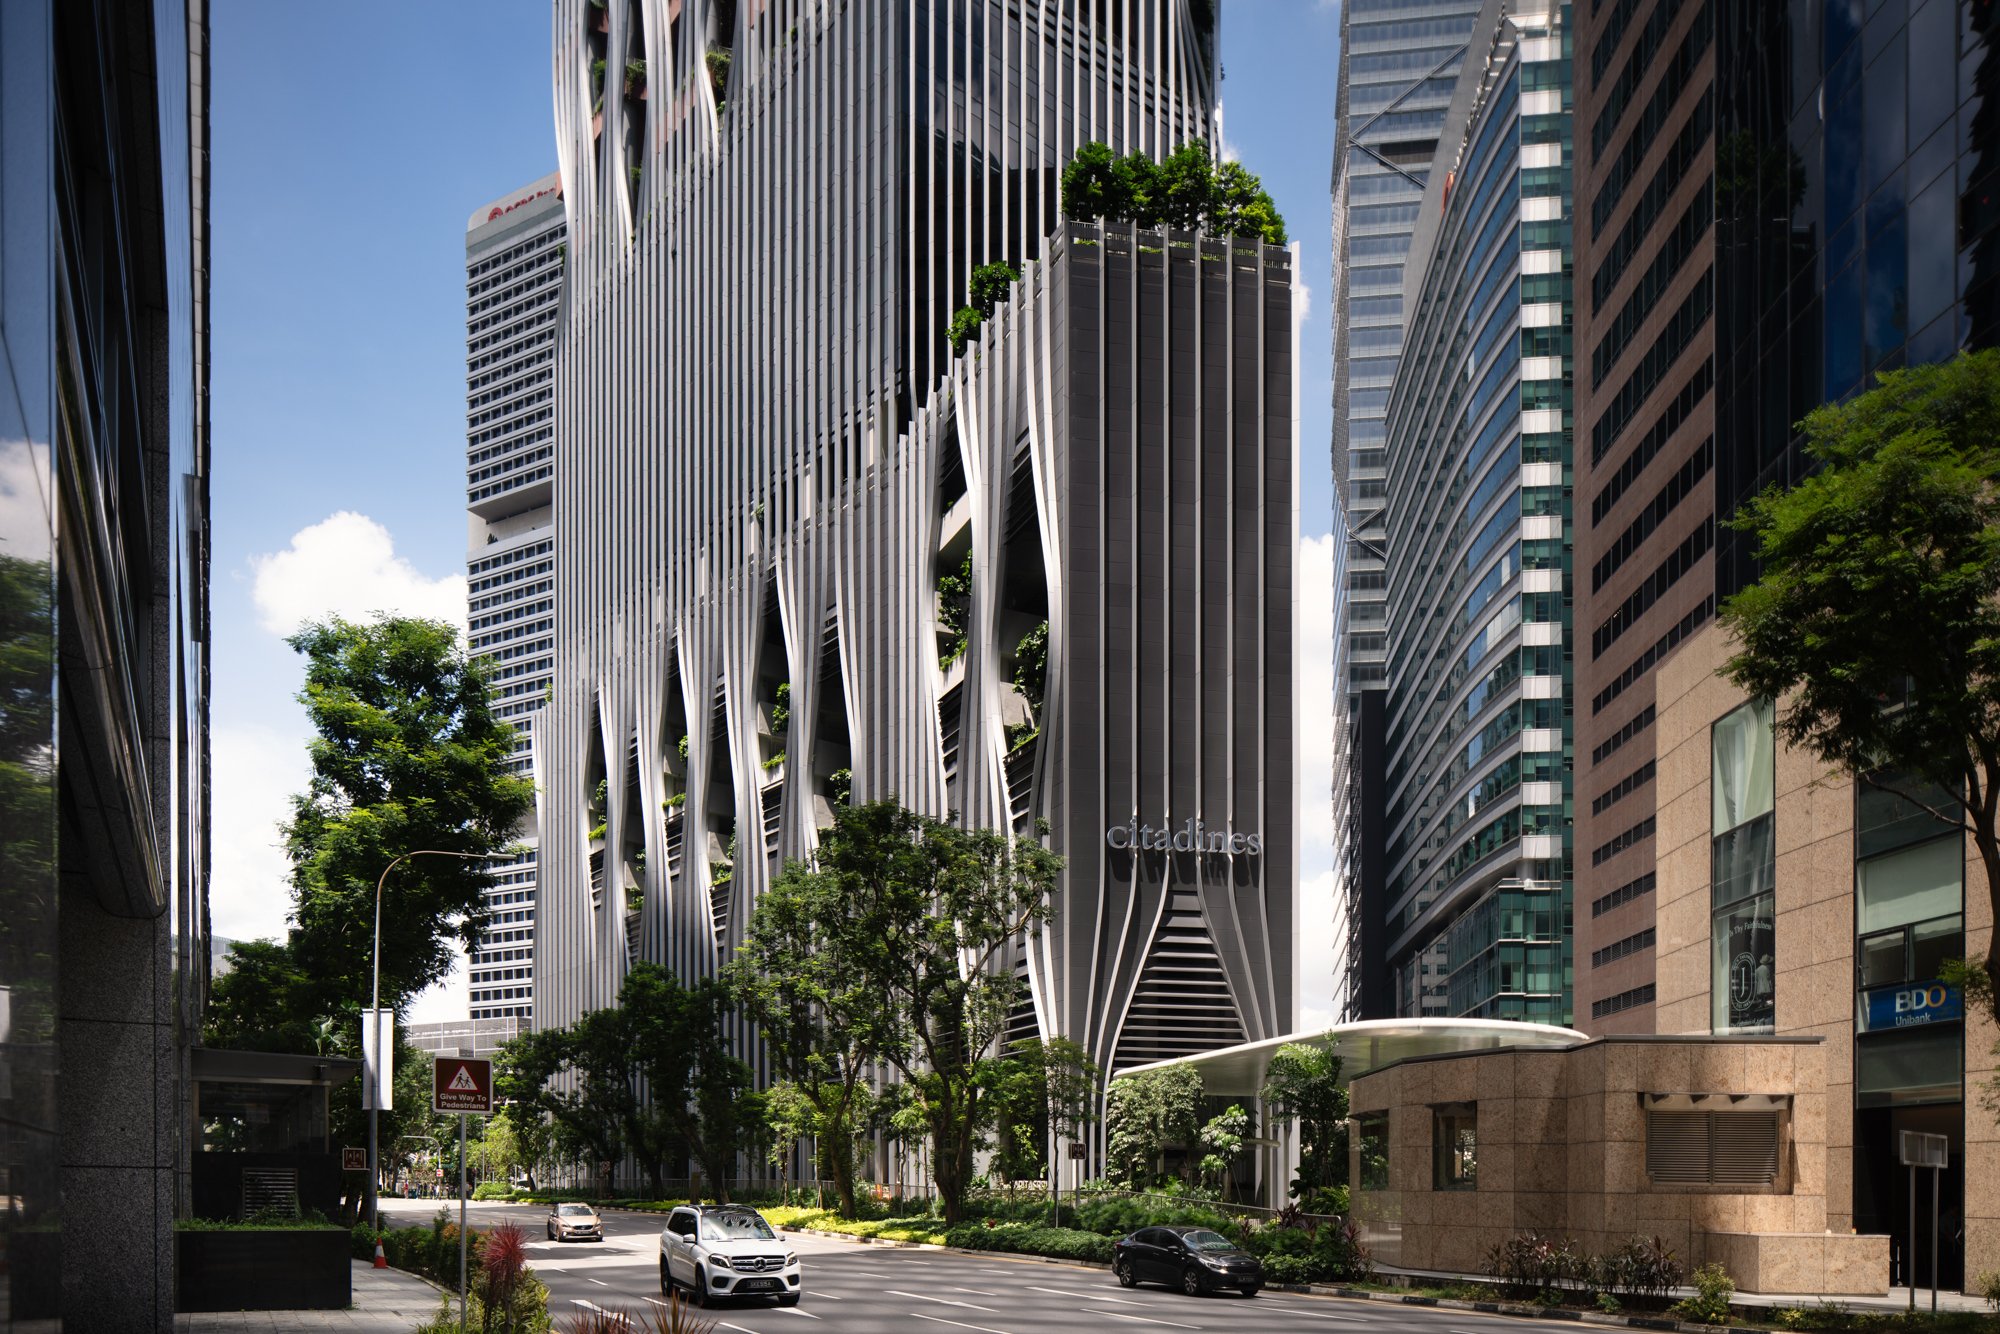  CapitaSpring Developed by Capitaland Designed by BIG Architects Singapore 